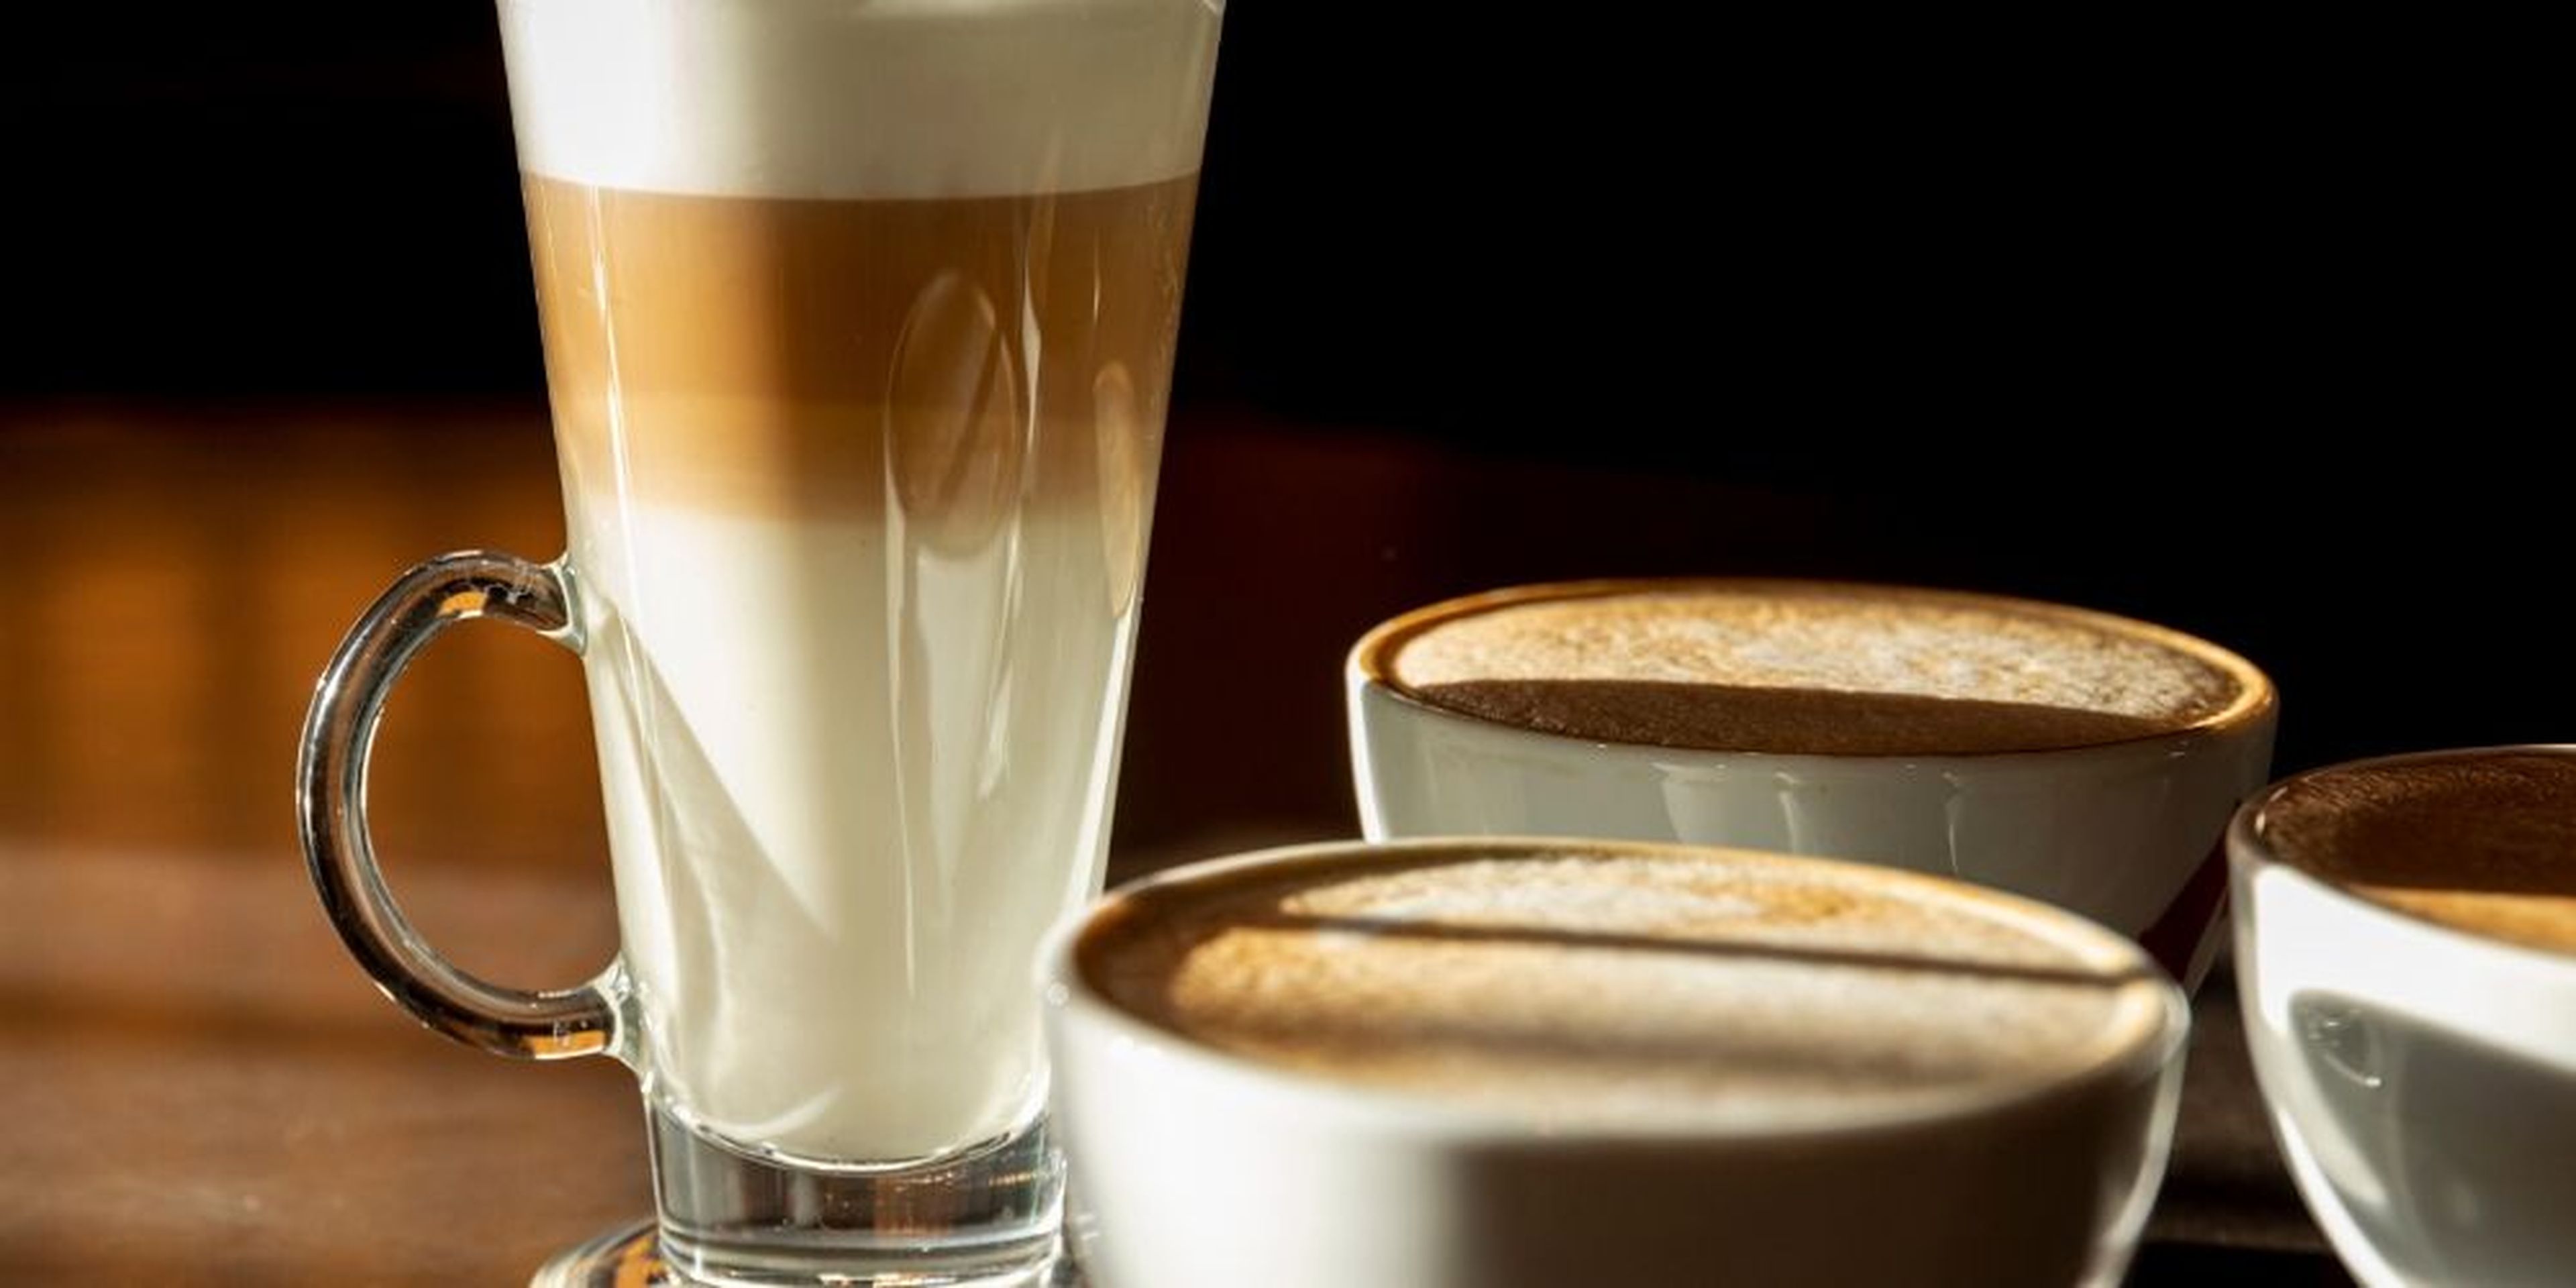 Hacendado Cafe capsula cafe con leche (compatible cafetera dolce